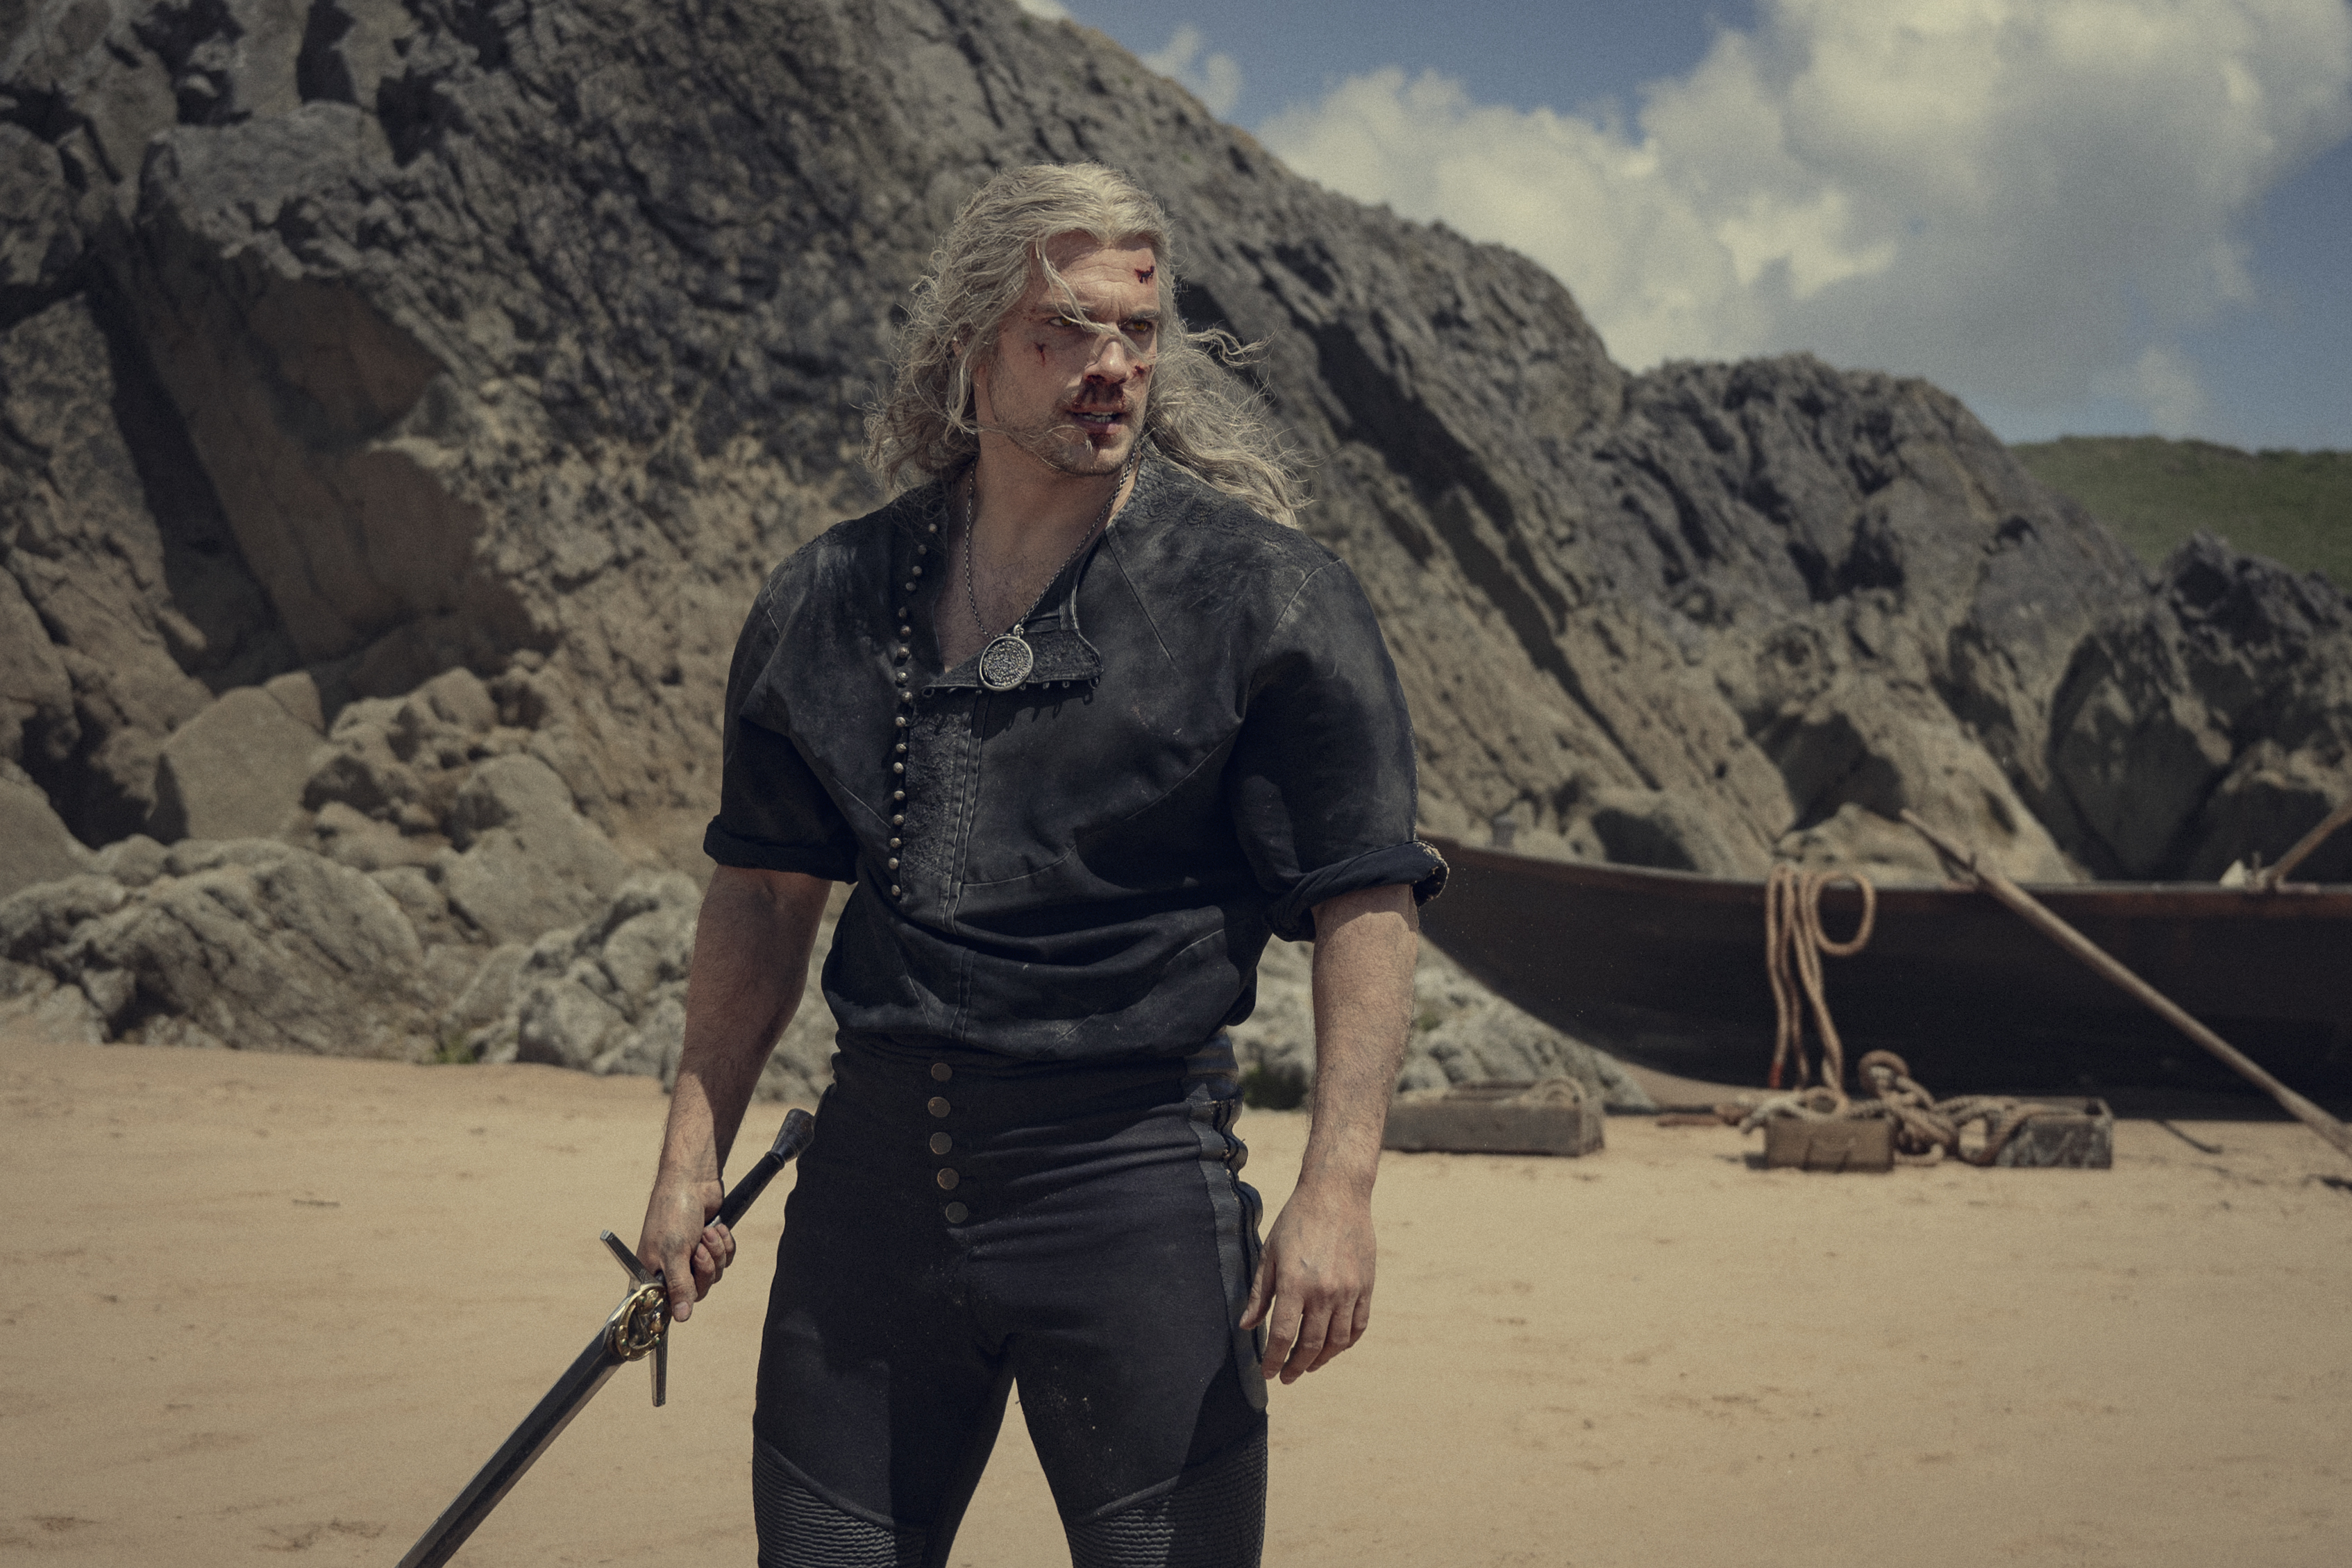 Henry as Geralt holding a sword